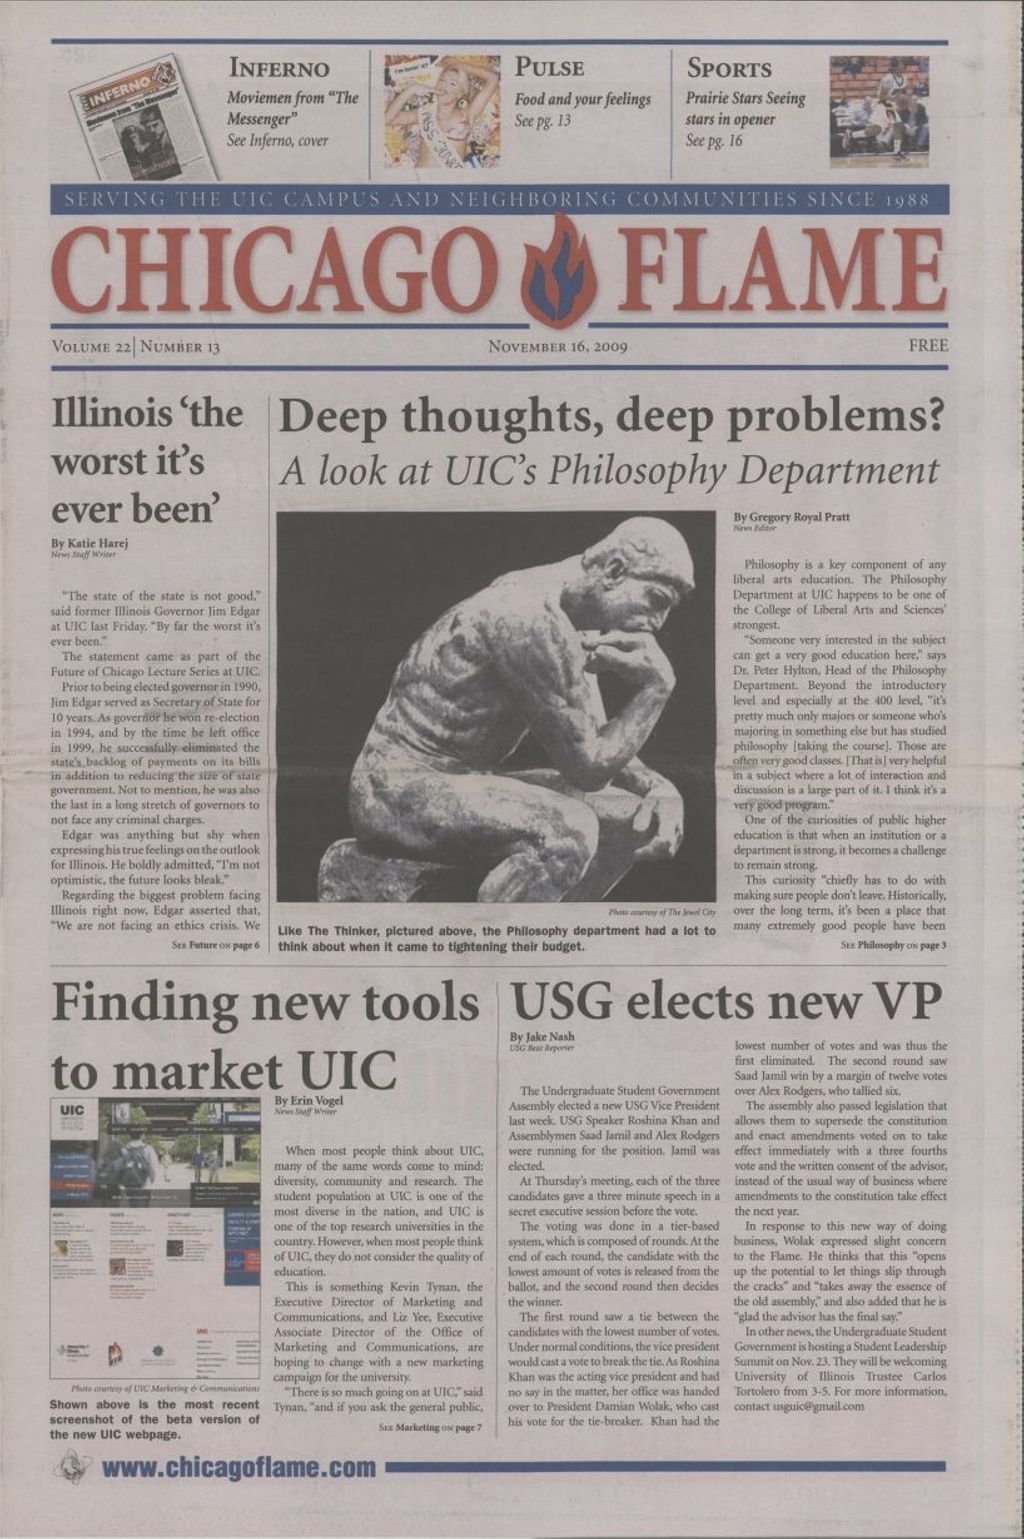 Miniature of Chicago Flame (November 16, 2009)